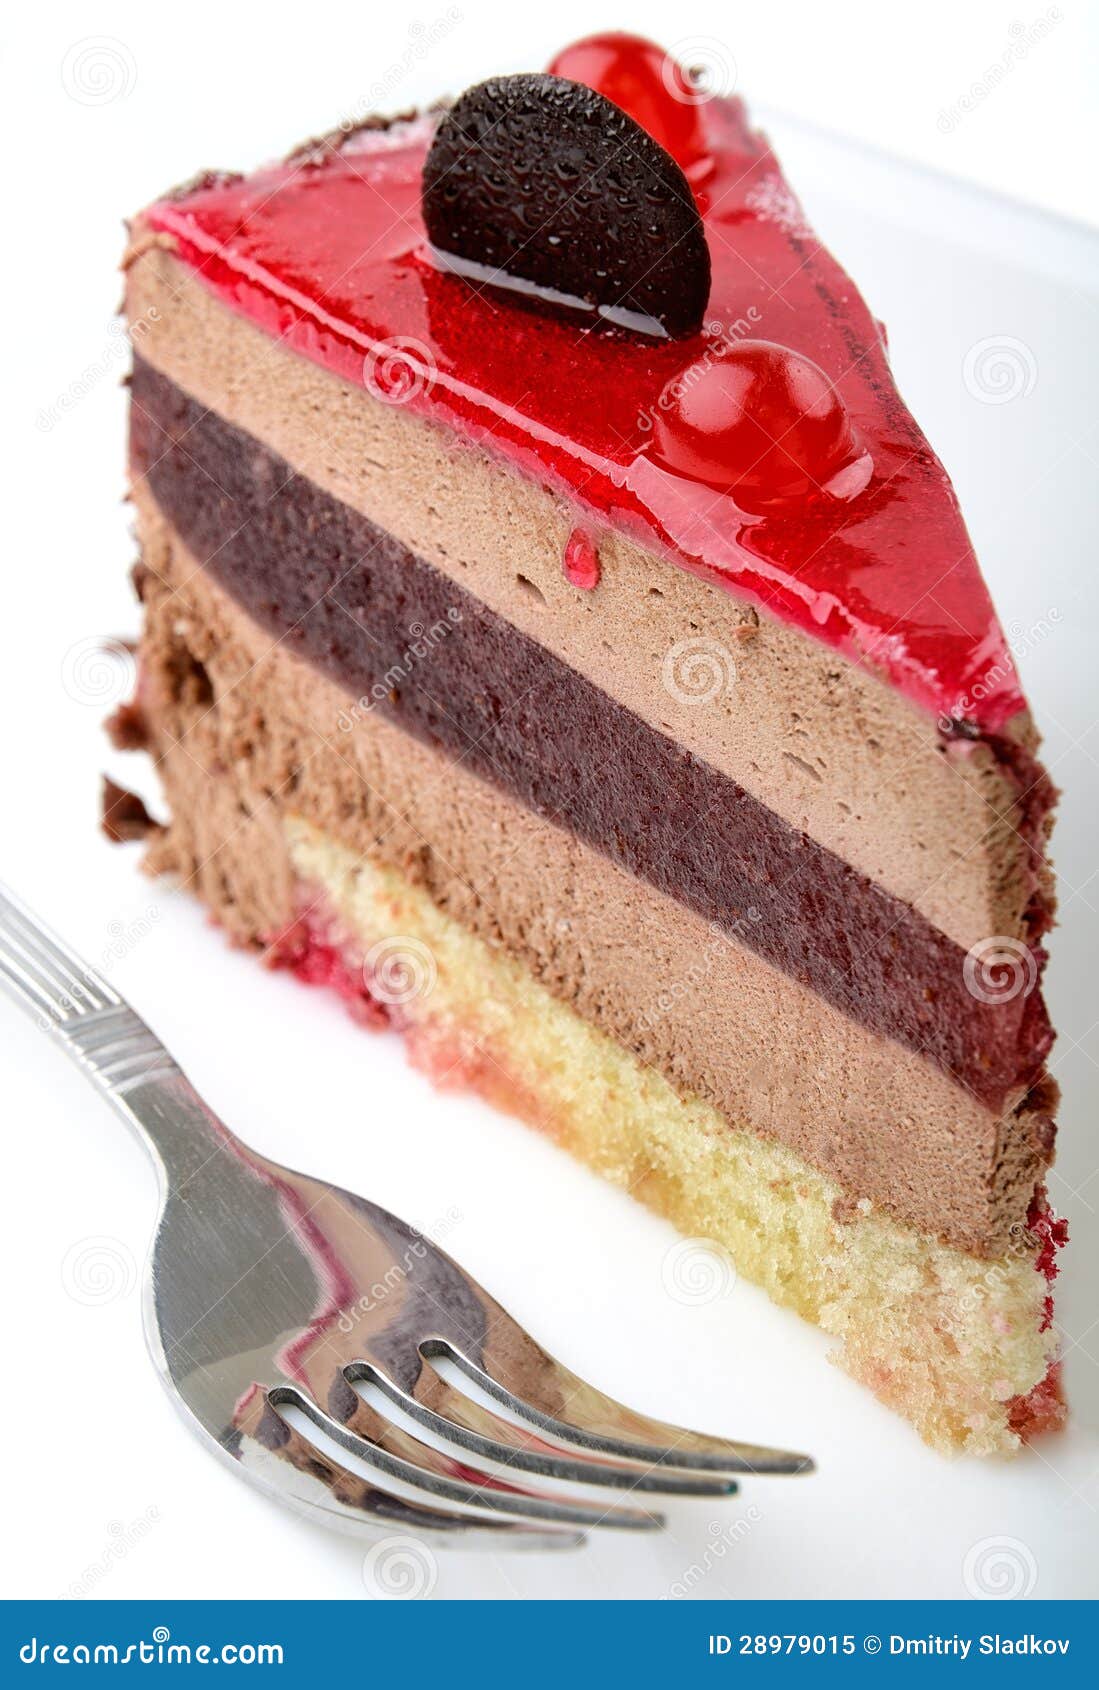 slice-cake-28979015.jpg